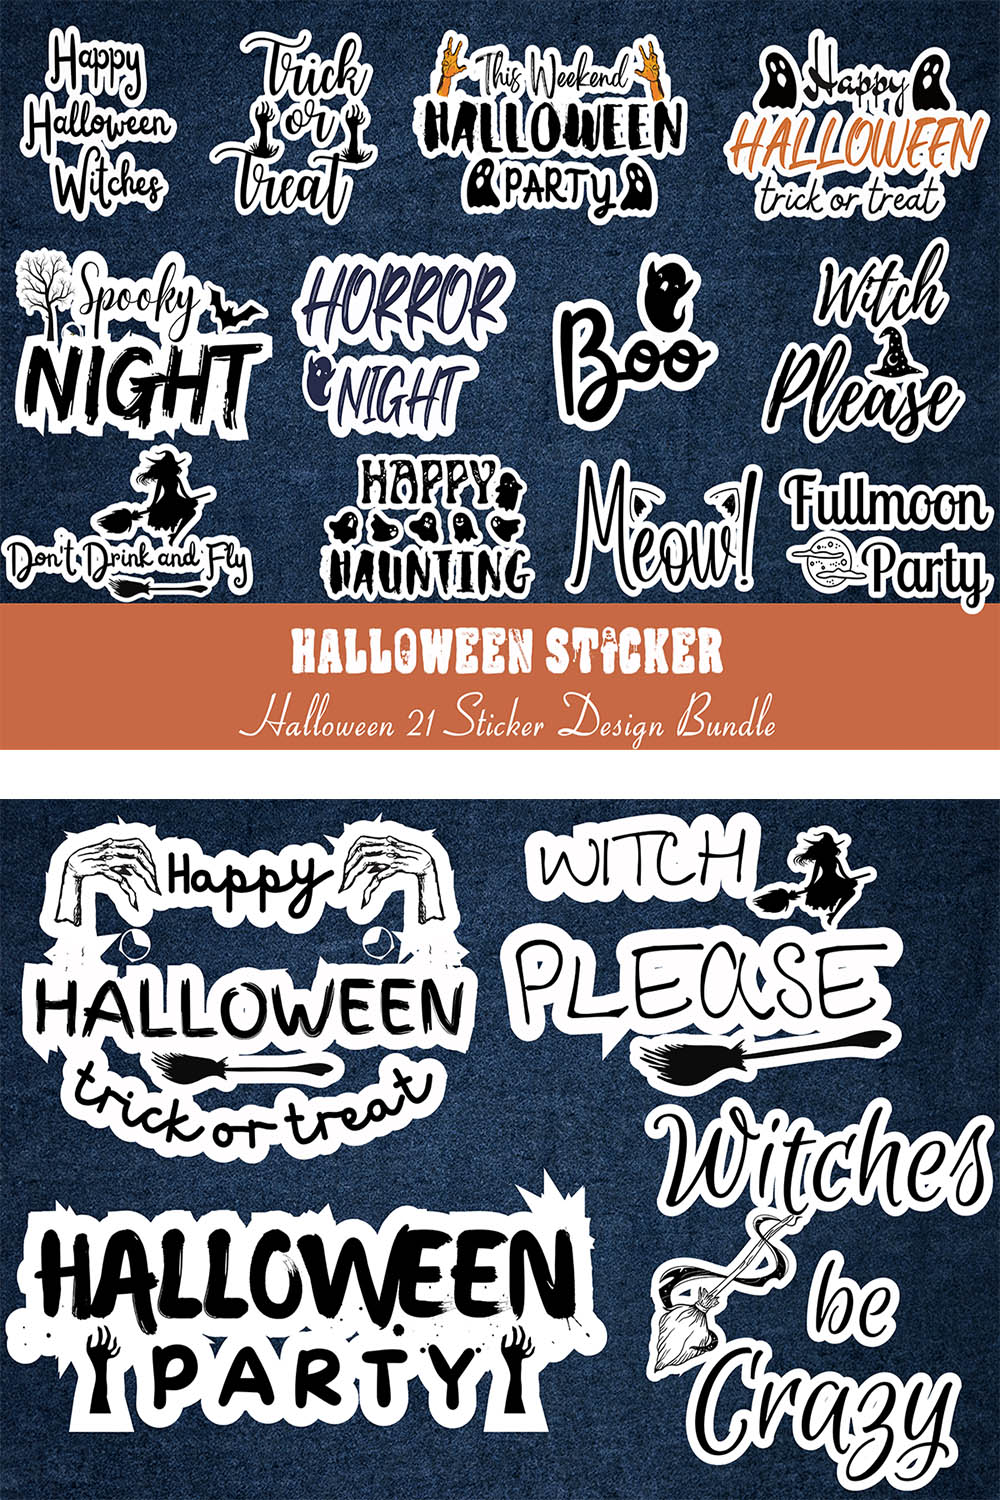 Halloween Sticker Design Bundle pinterest image.